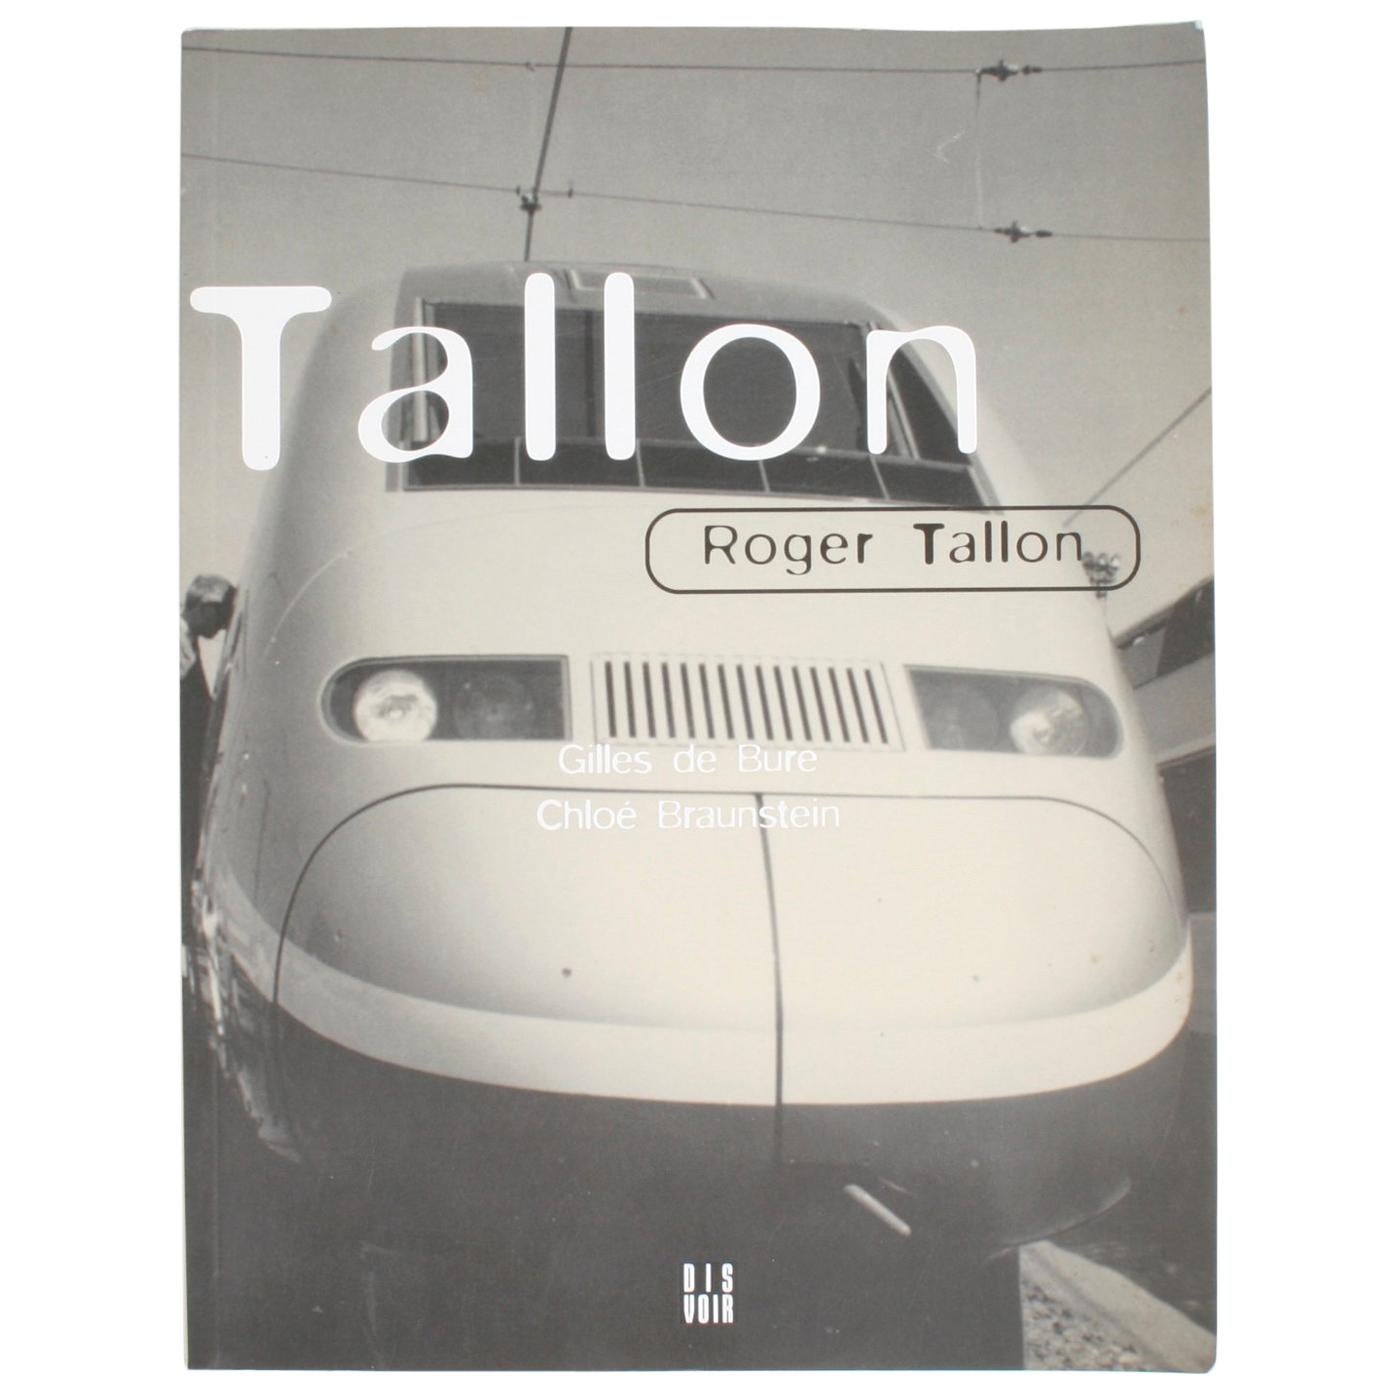 Roger Tallon by Roger Tallon, Chloe Braunstein, and Gilles de Bure For Sale